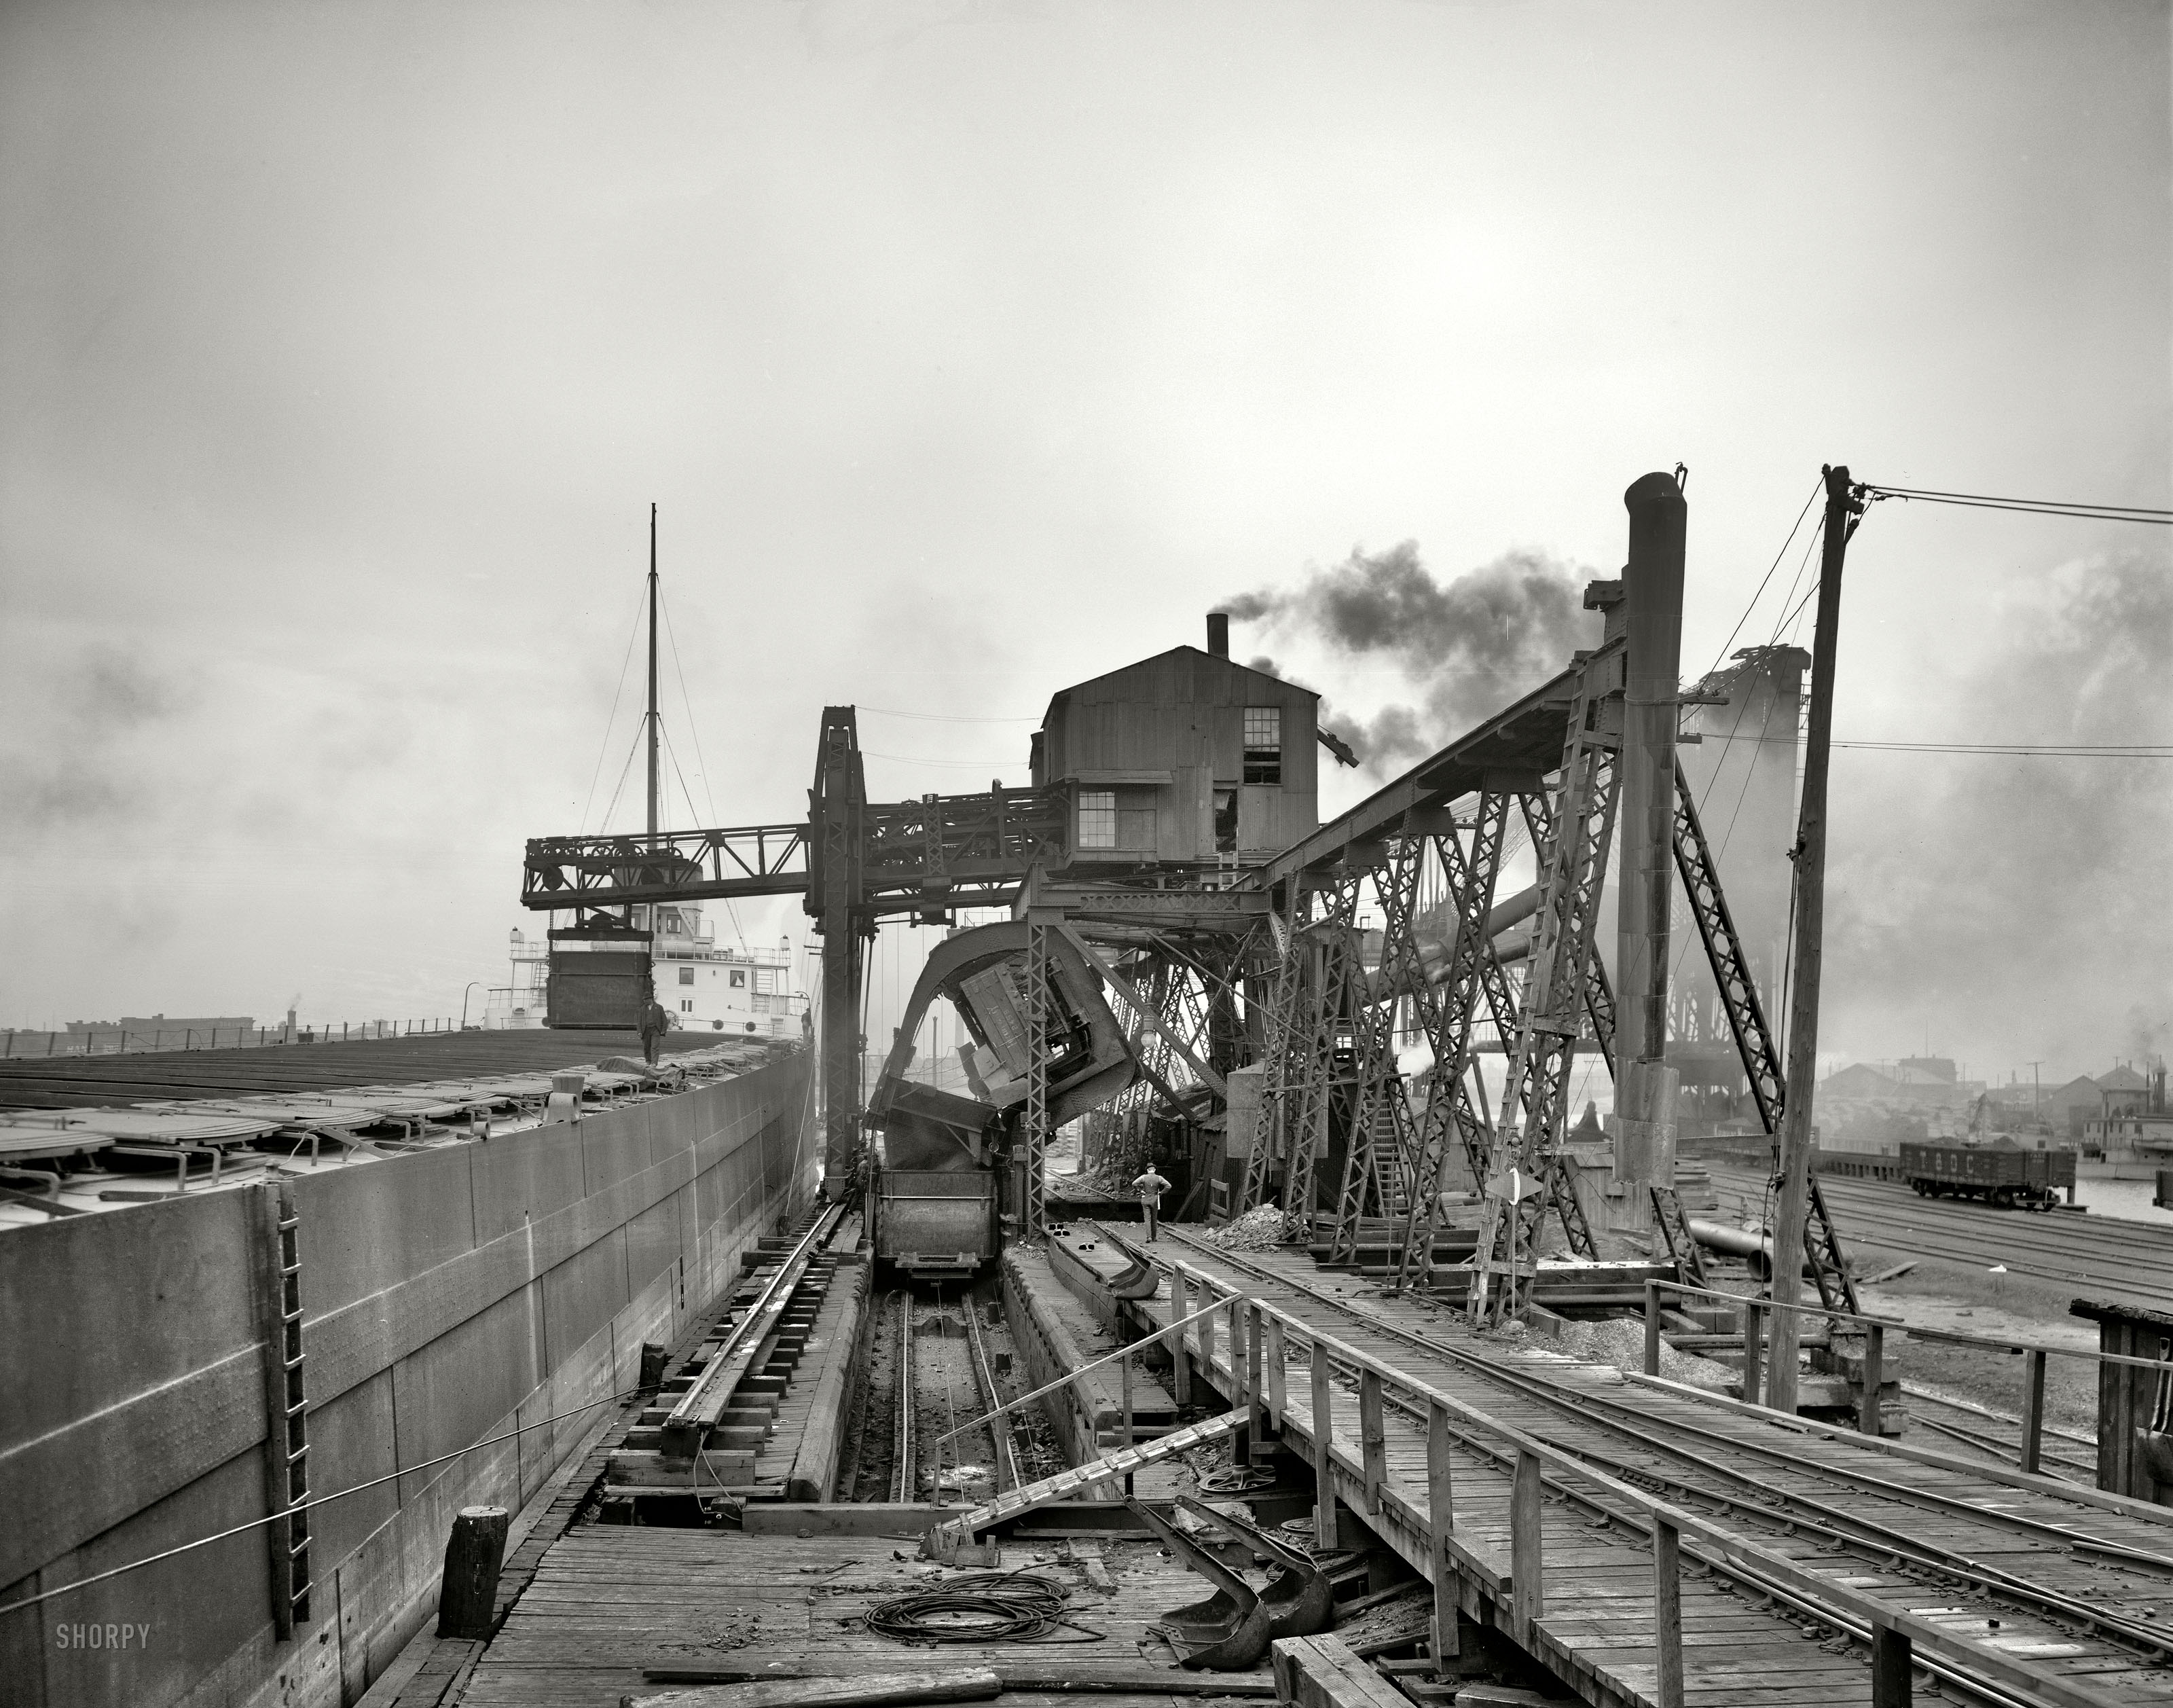 Toledo, Ohio, circa 1910. "Brown hoist, Ohio Central coal dock." 8x10 inch dry plate glass negative, Detroit Publishing Company. View full size.